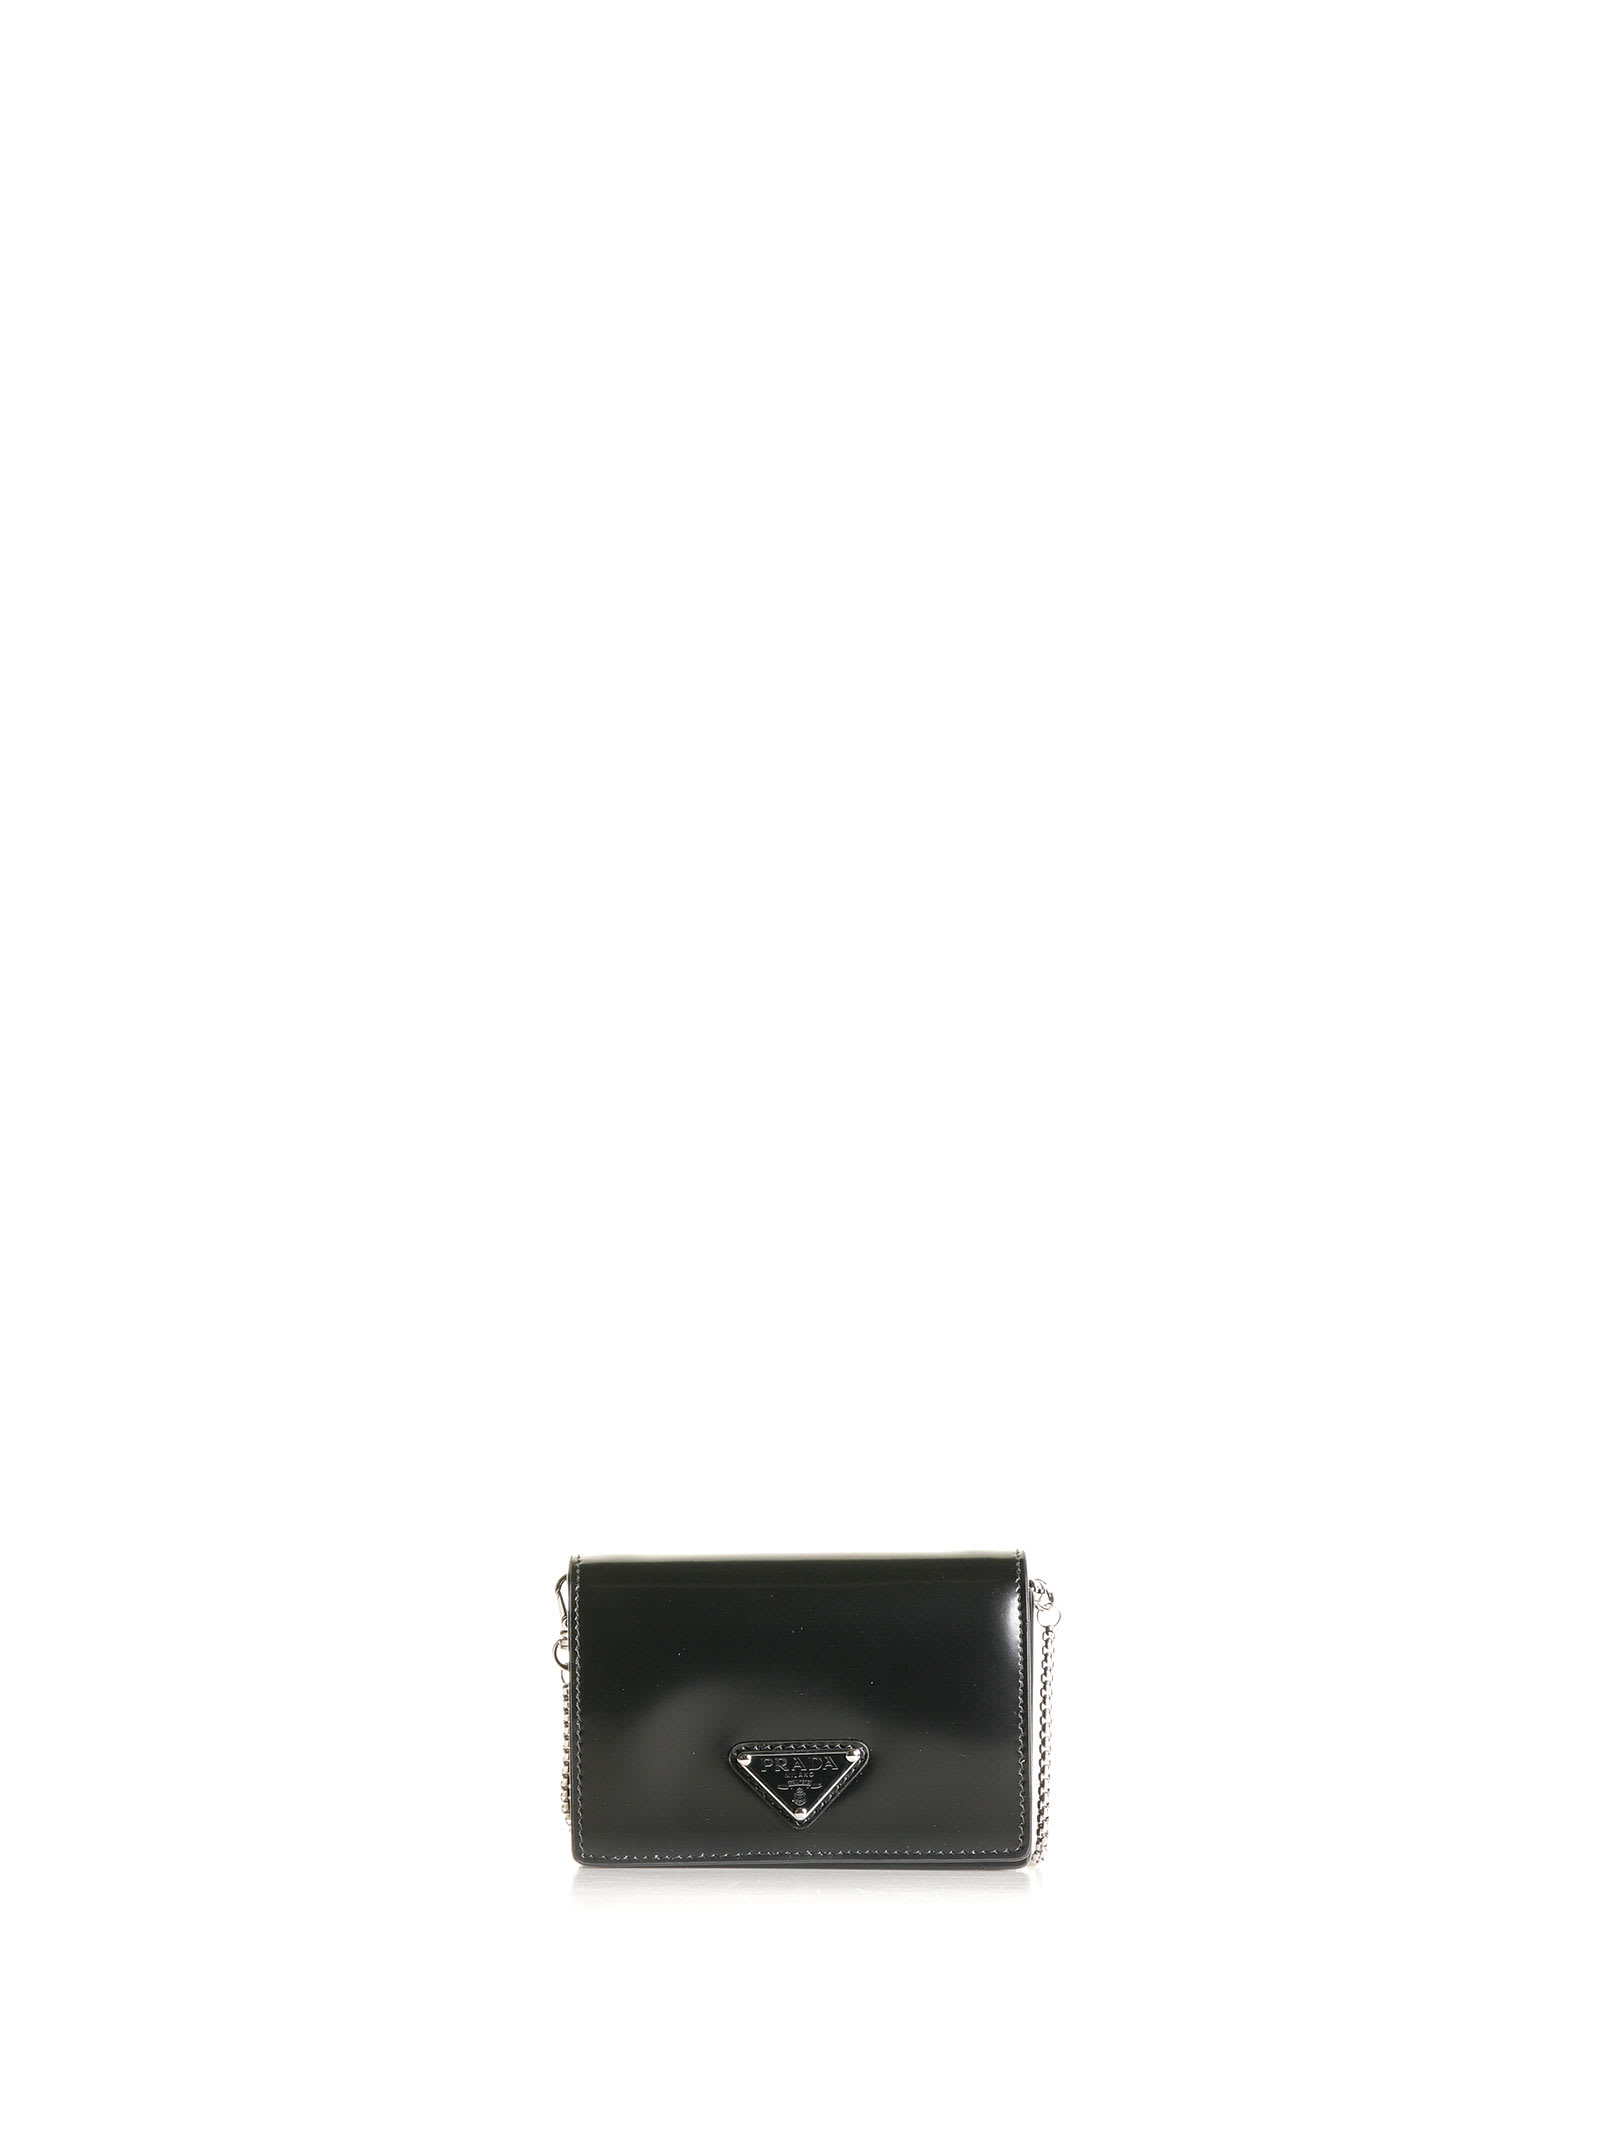 Prada Leather Card Holder With Shoulder Strap In Nero